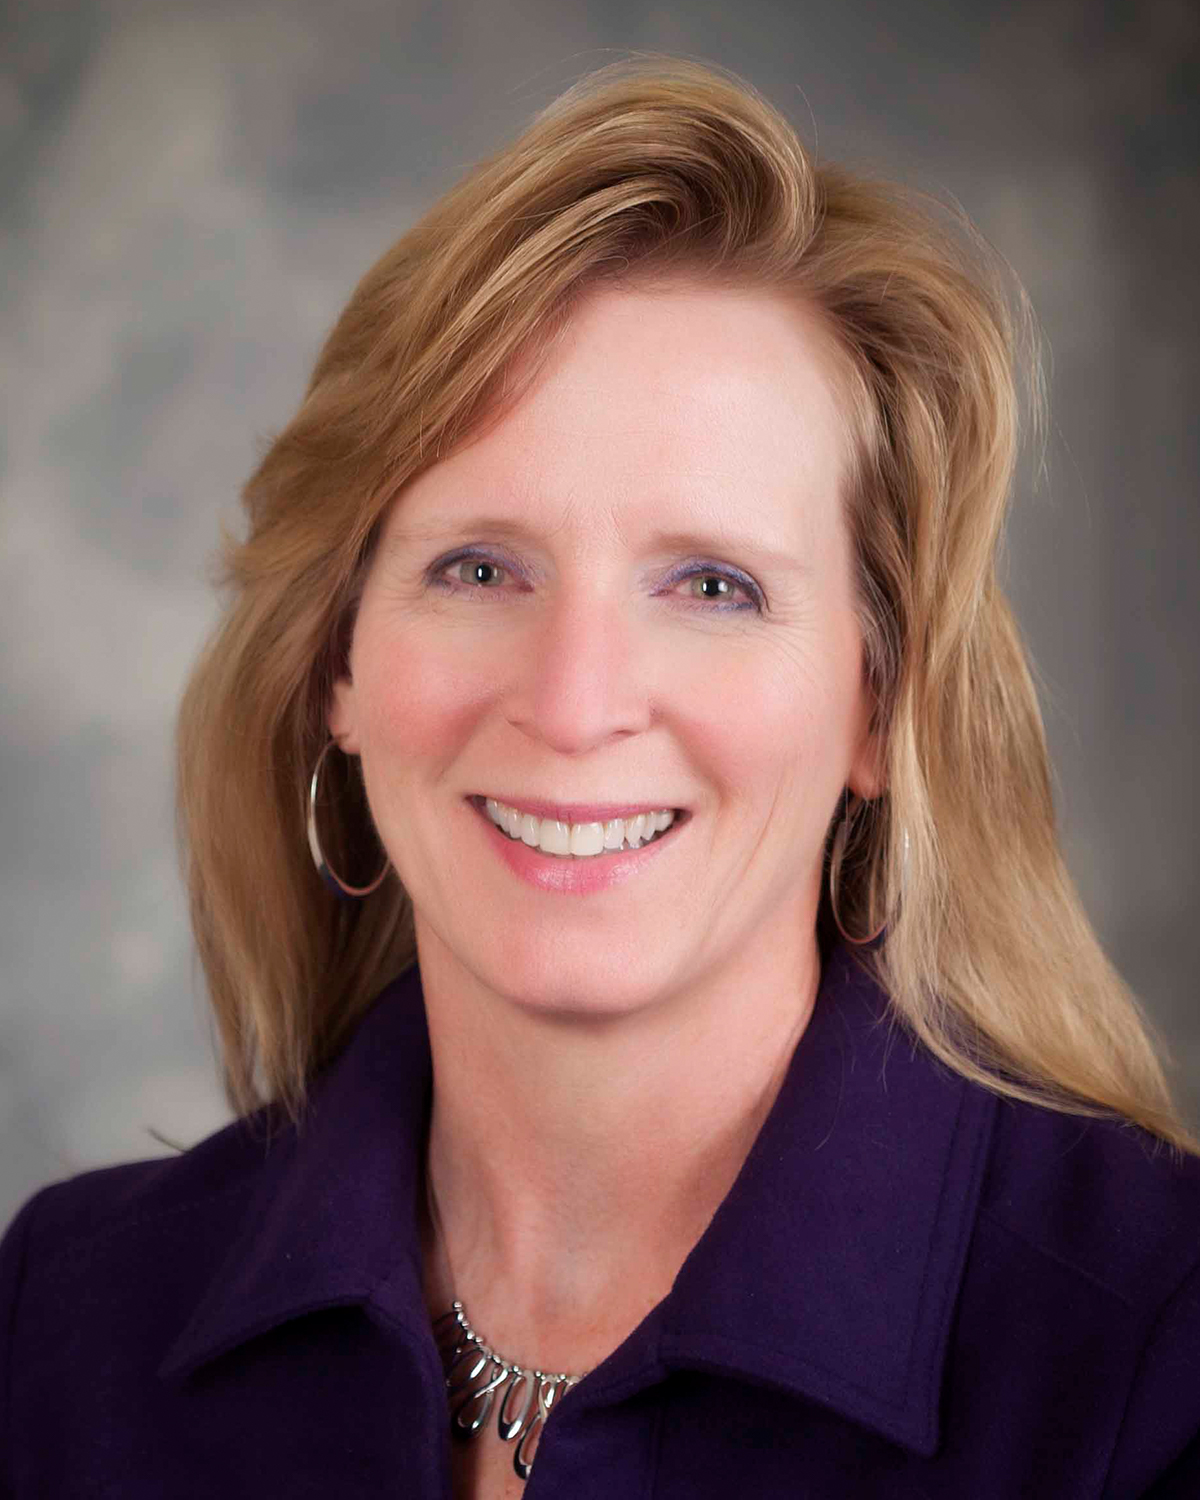 Judy Stroh, ASIC North's Treasurer